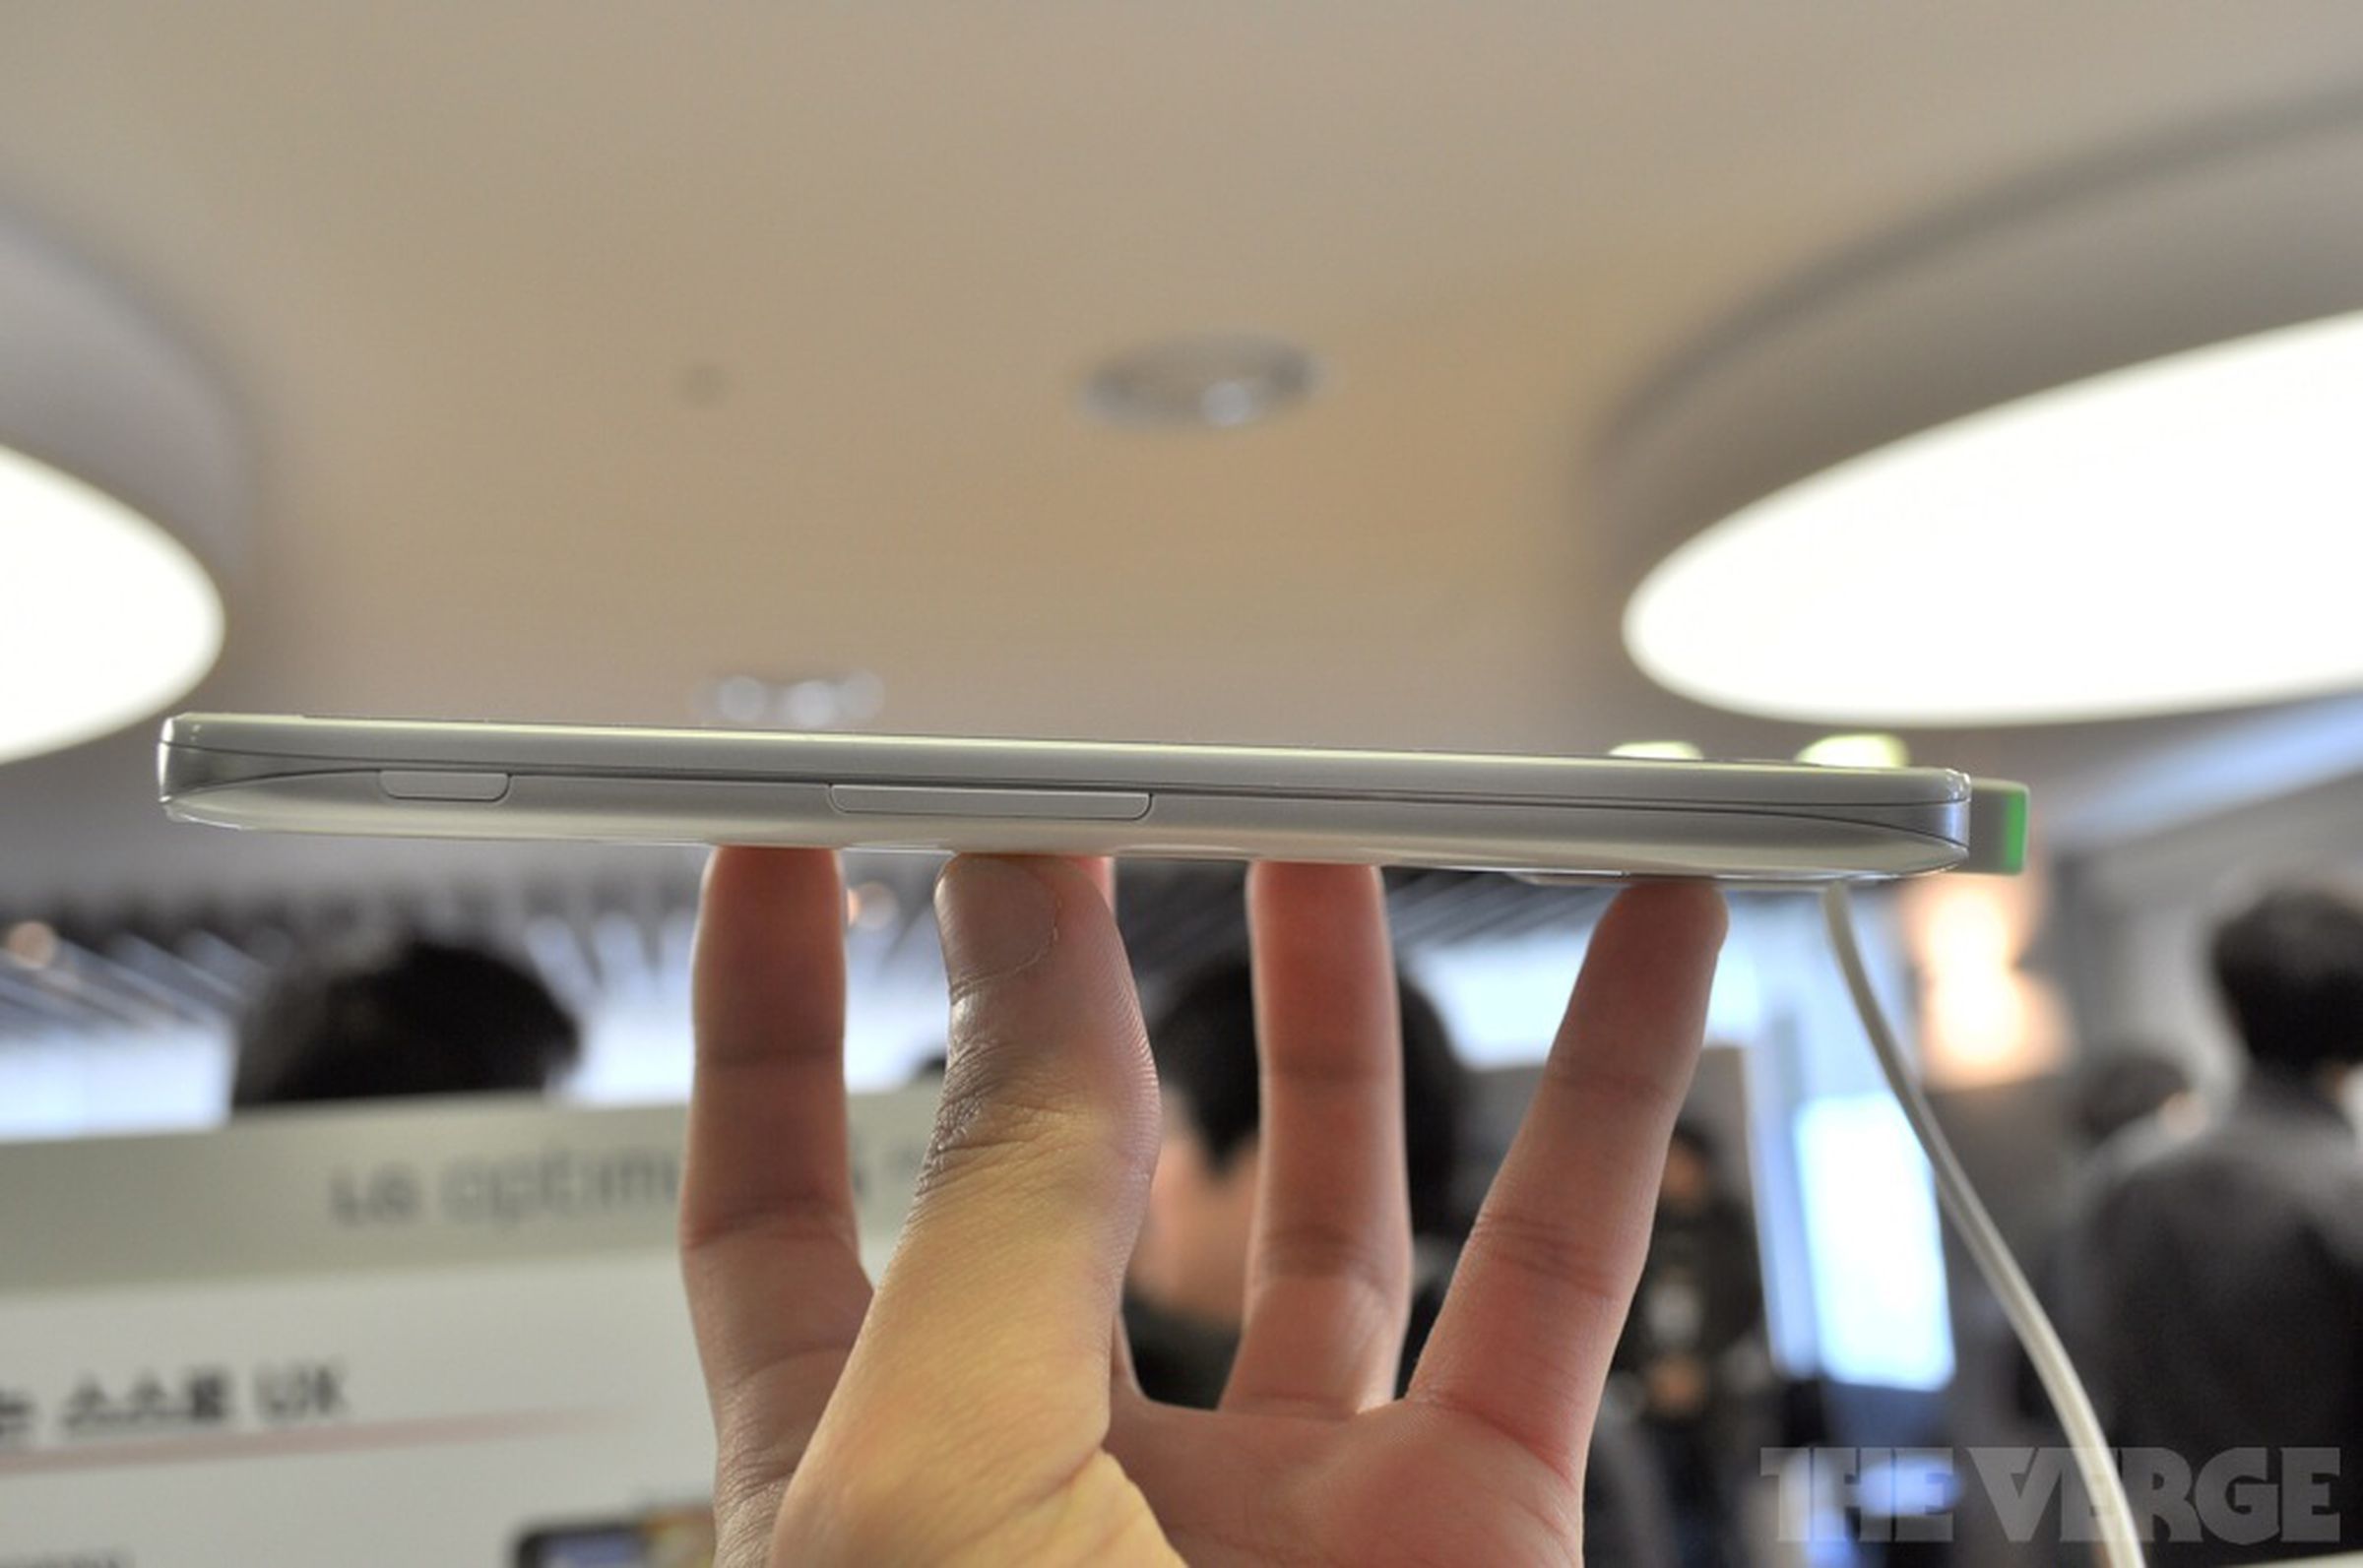 LG Optimus G Pro (5.5-inch) photos